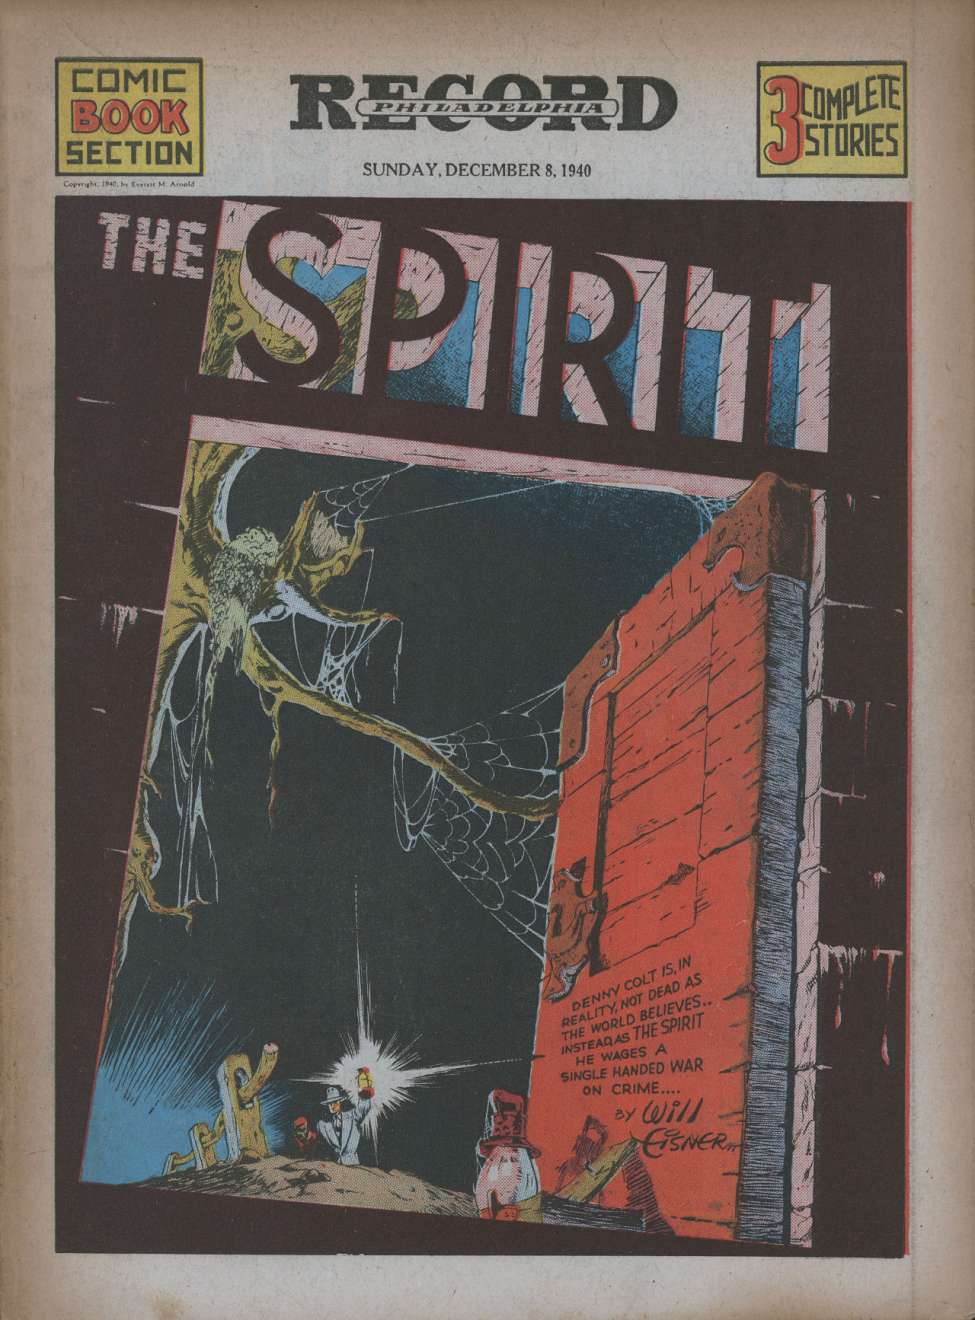 Comic Book Cover For The Spirit (1940-12-08) - Philadelphia Record